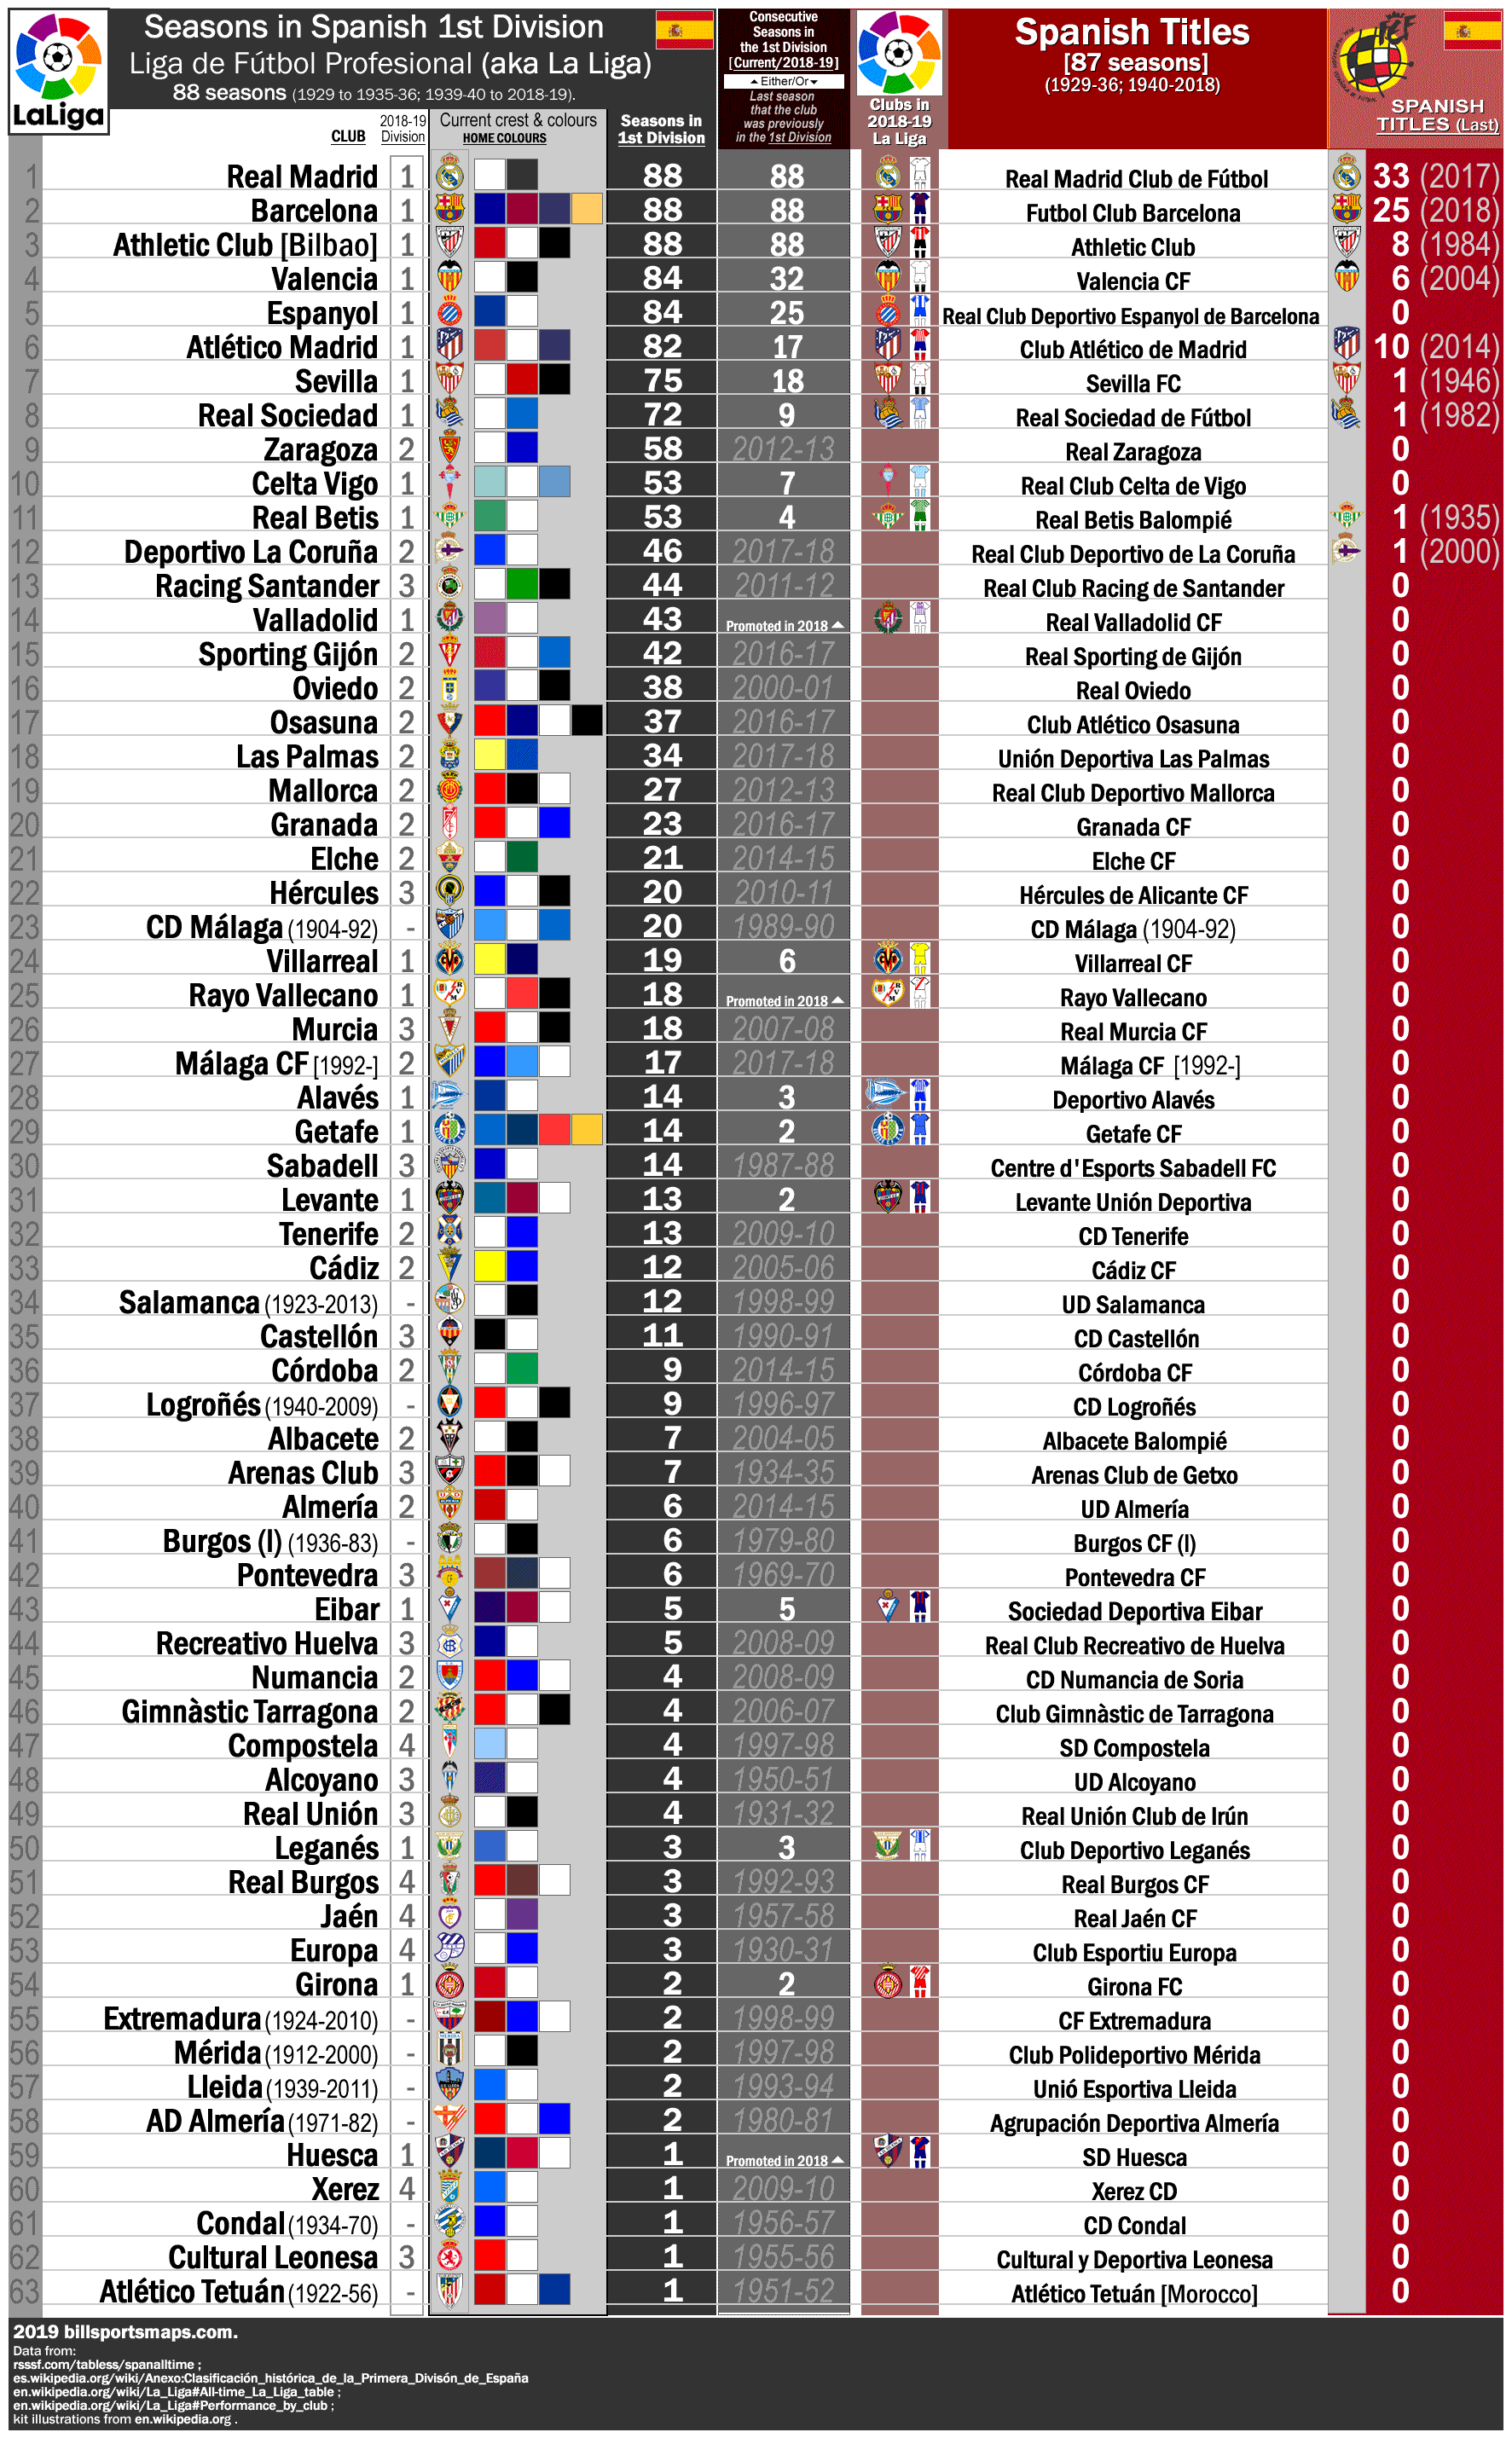 la liga winners from 2000 to 2018